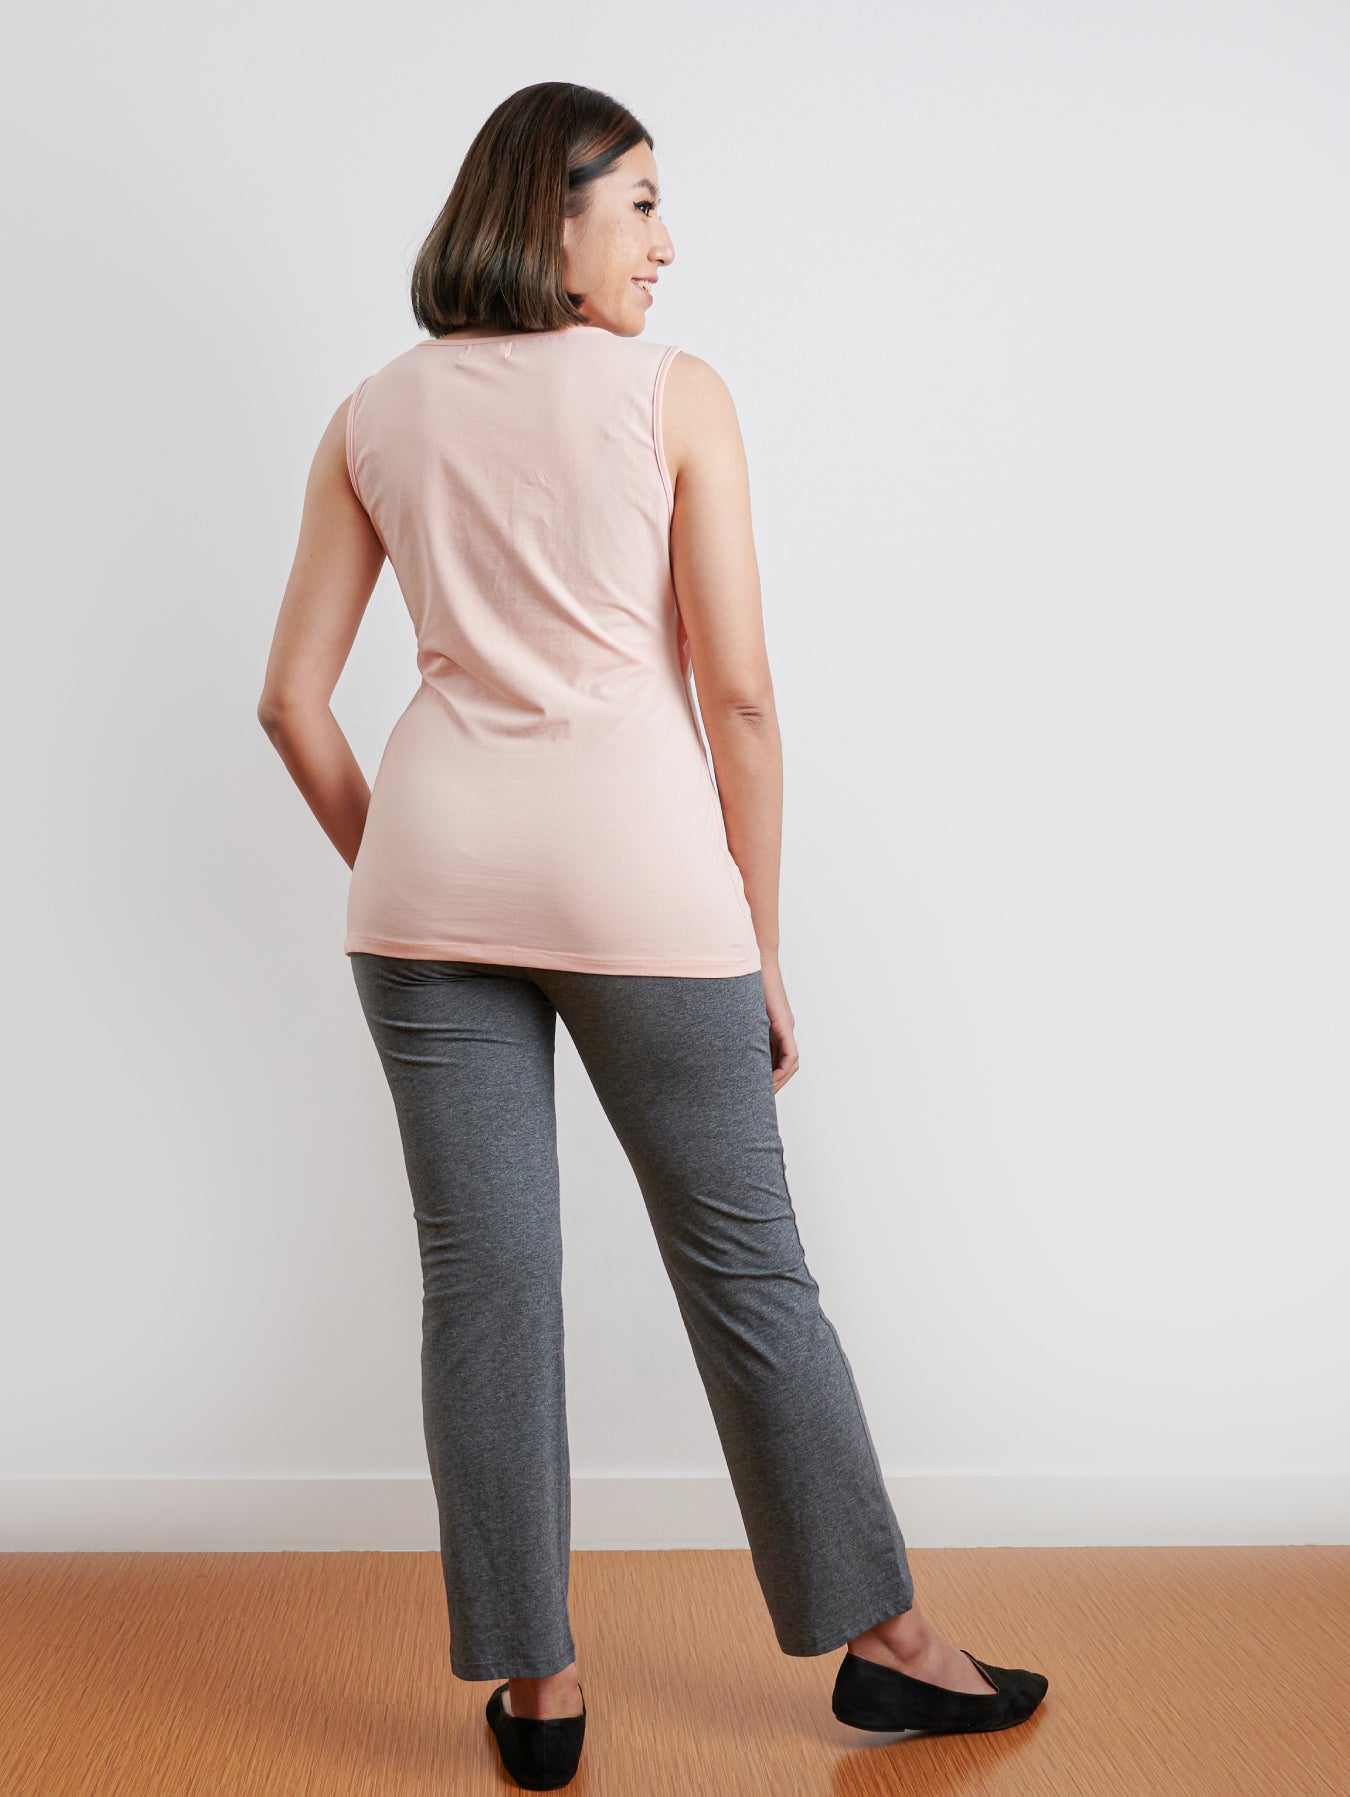 Sleek and comfortable postpartum wear